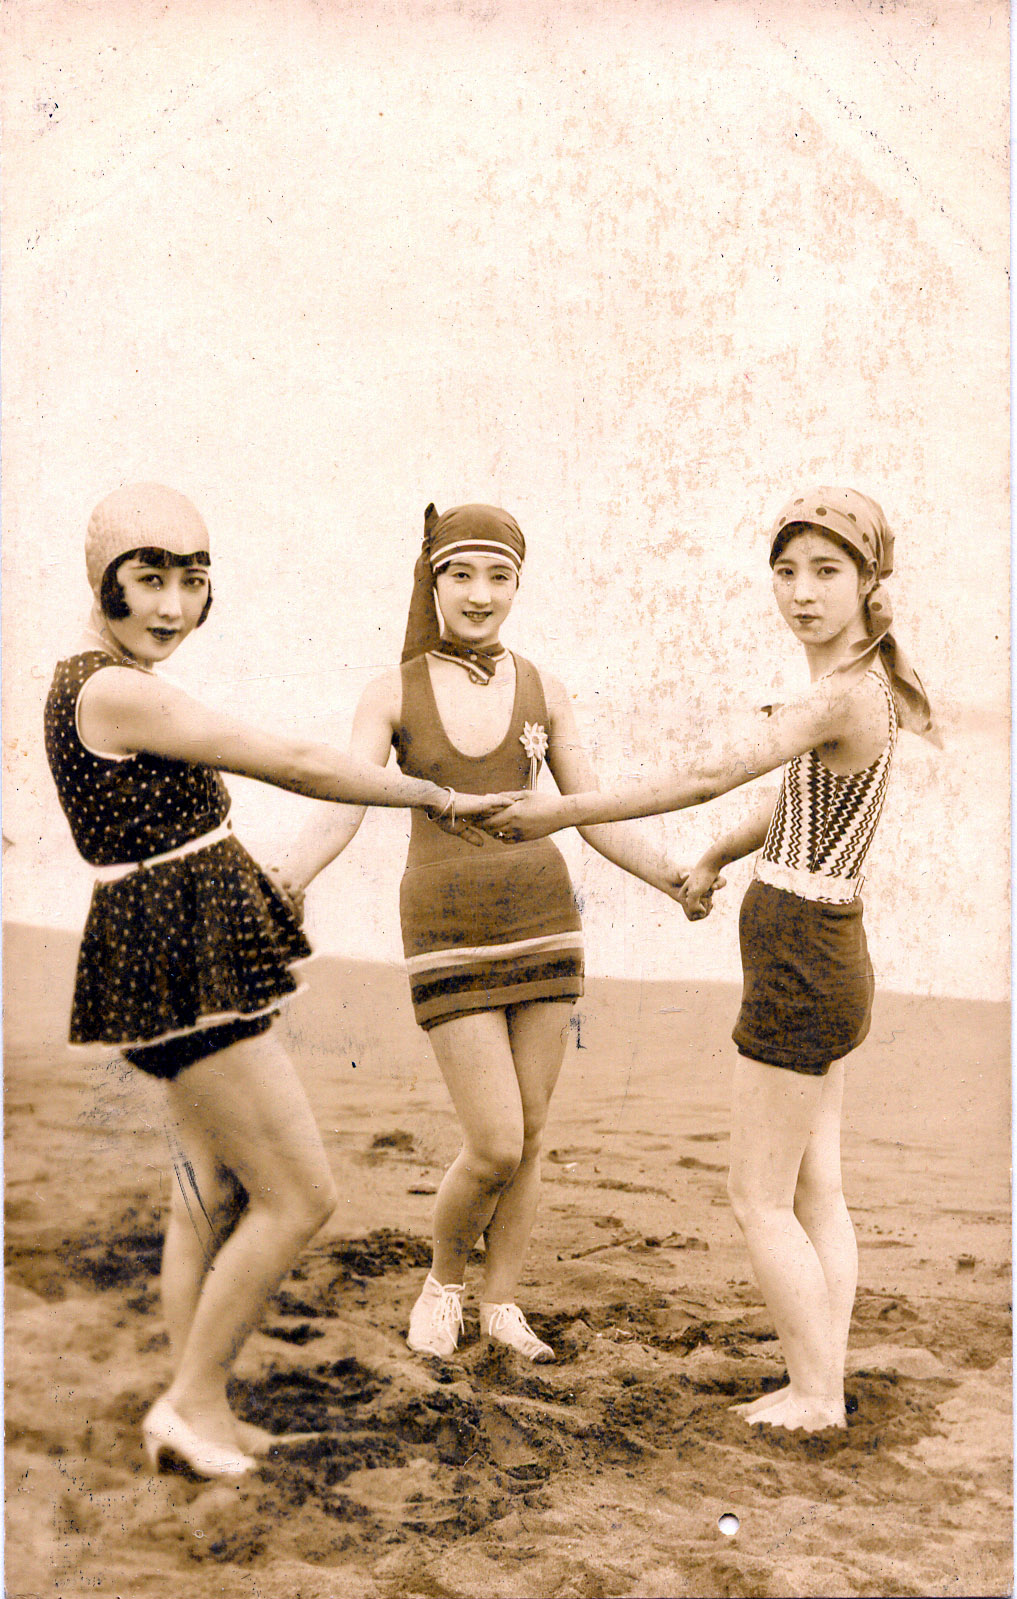 Changing fashion (Swimsuit), c. 1920.